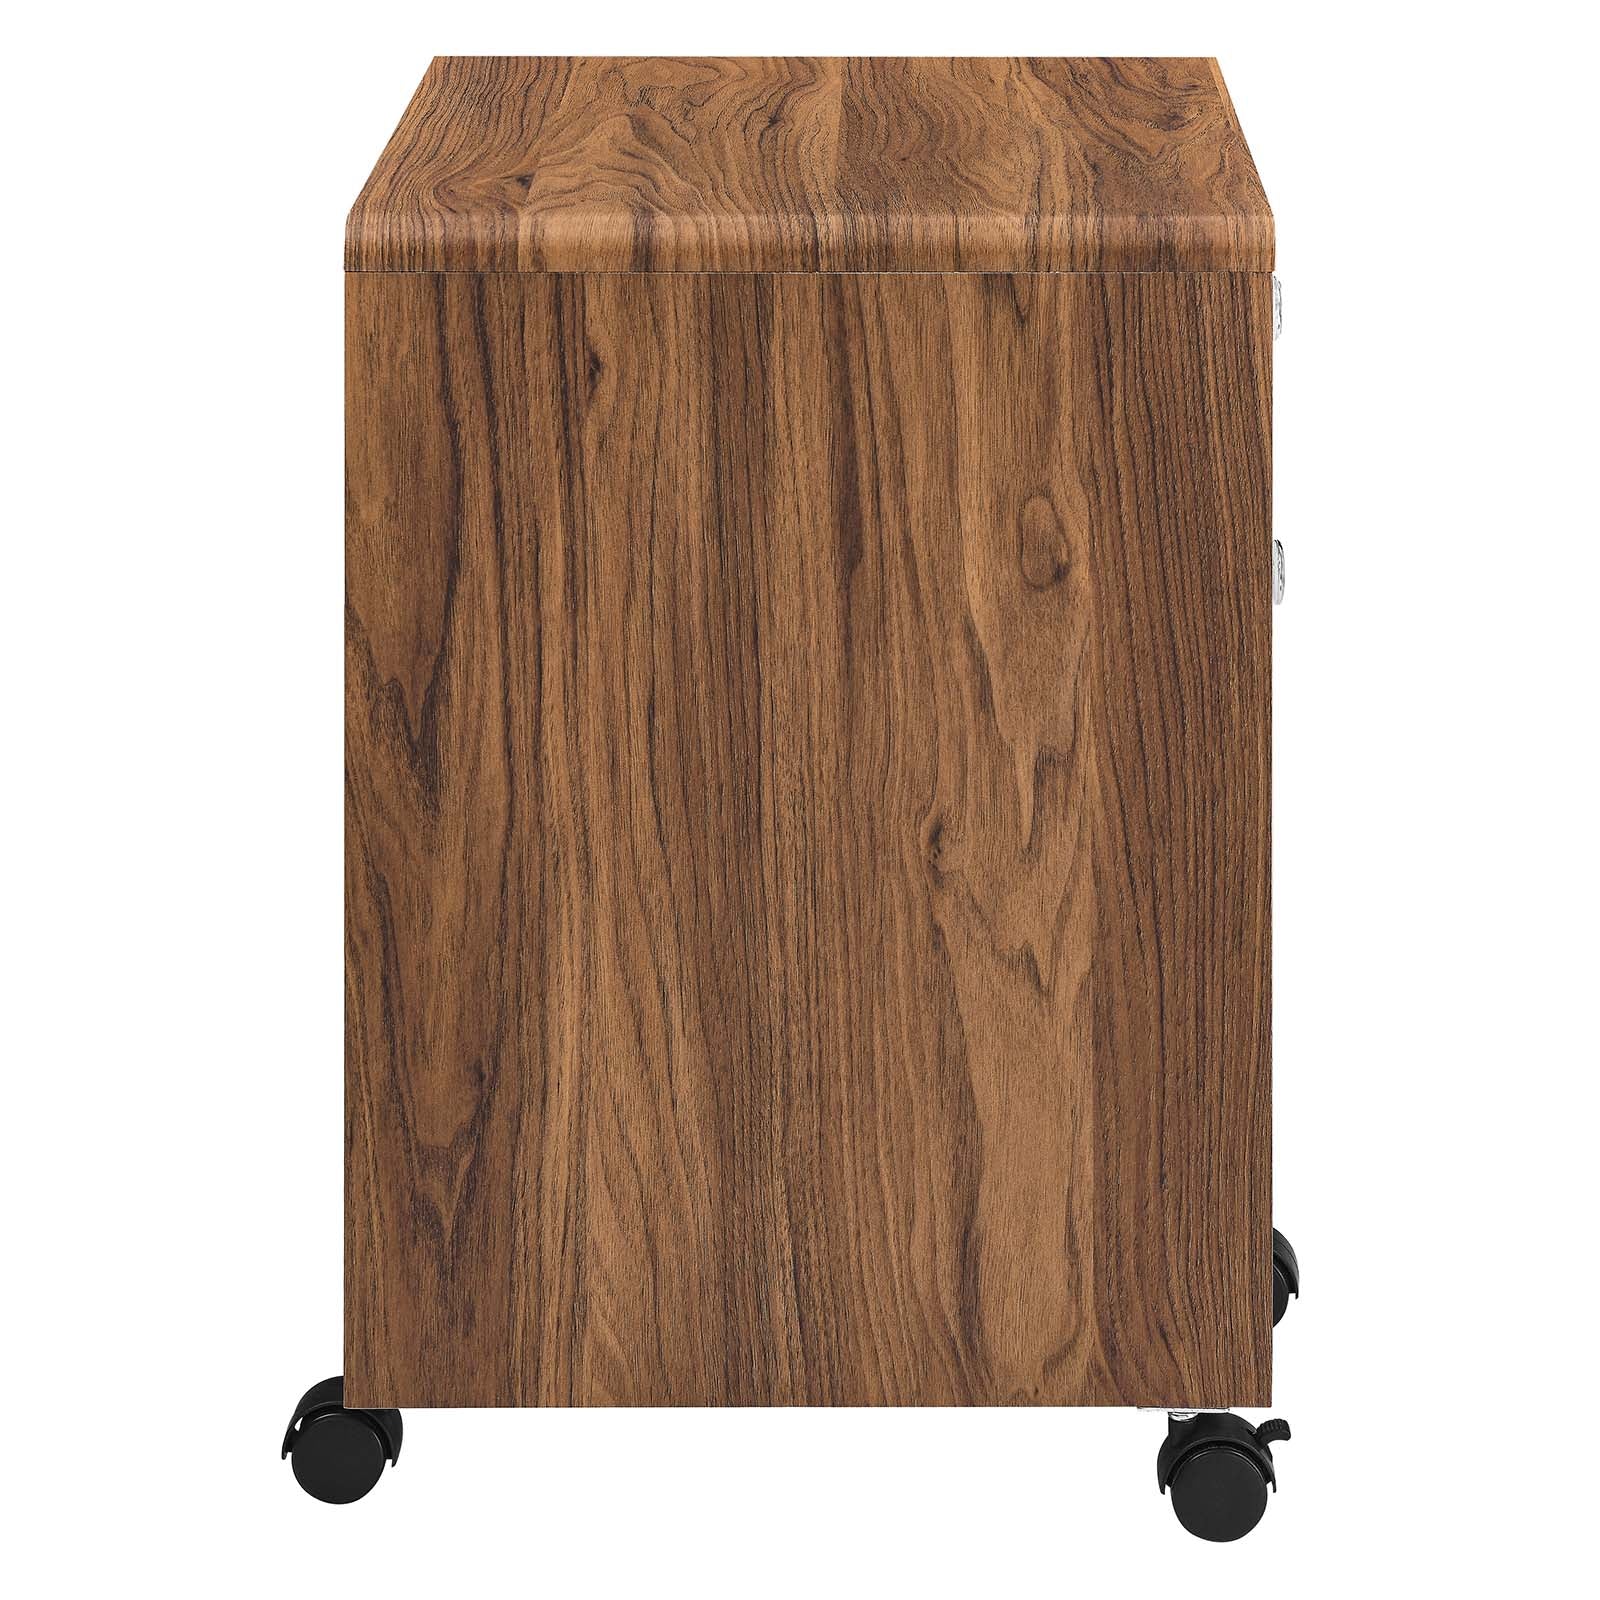 Transmit Wood File Cabinet - East Shore Modern Home Furnishings